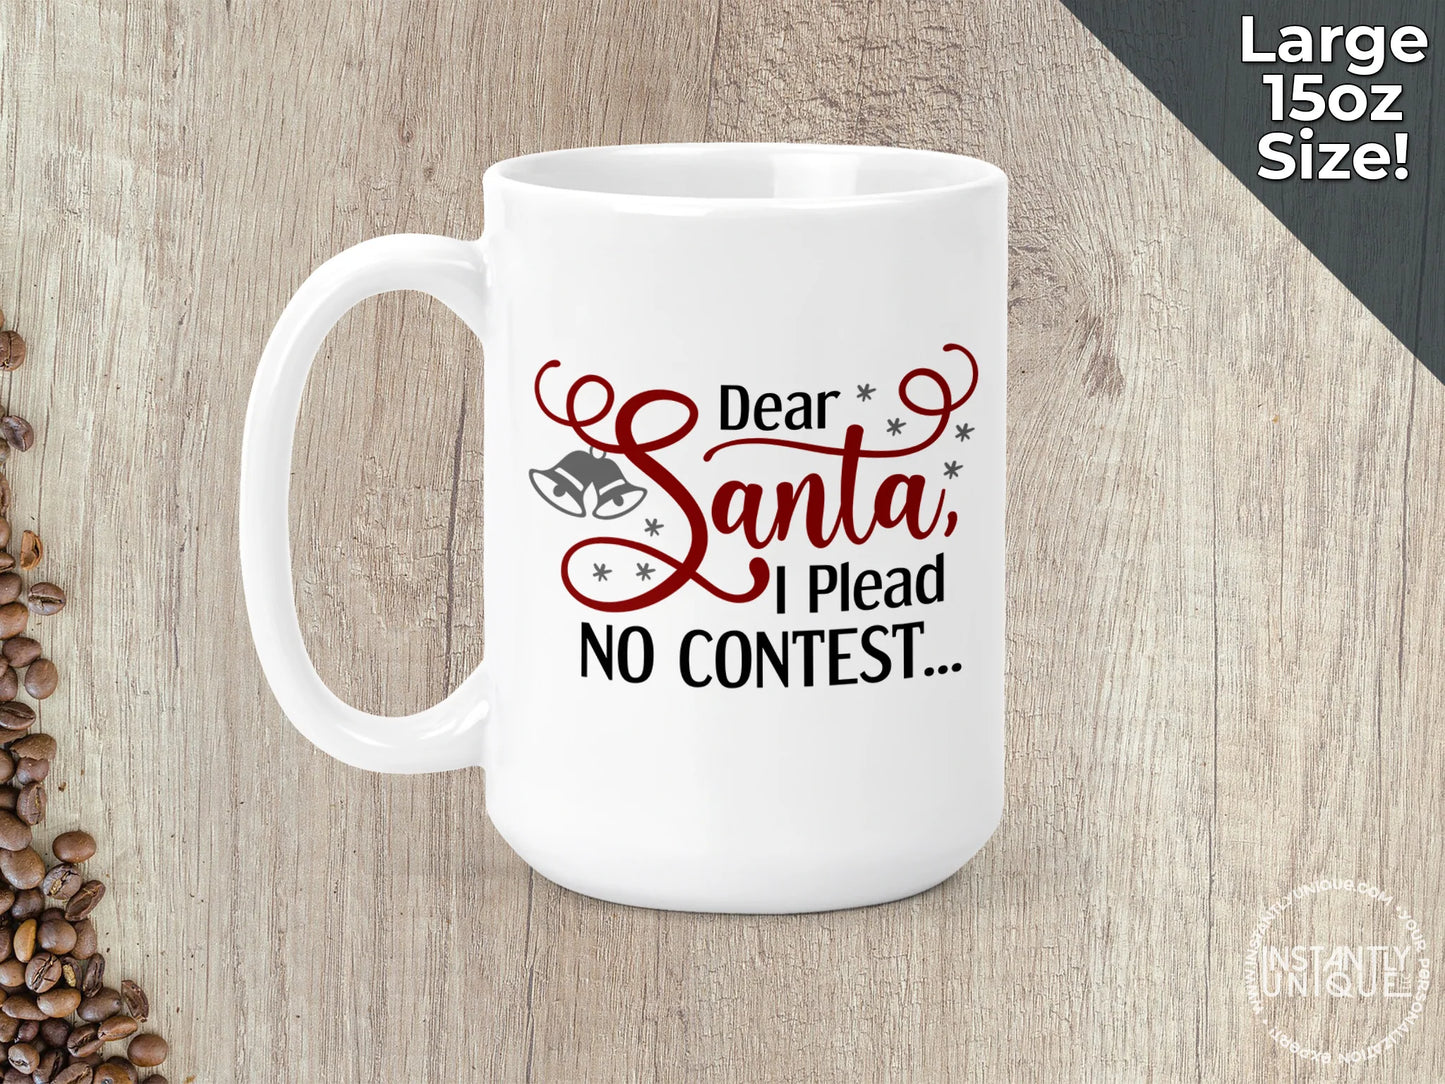 Dear Santa, I Plead No Contest - Holiday Large 15oz Coffee Mug